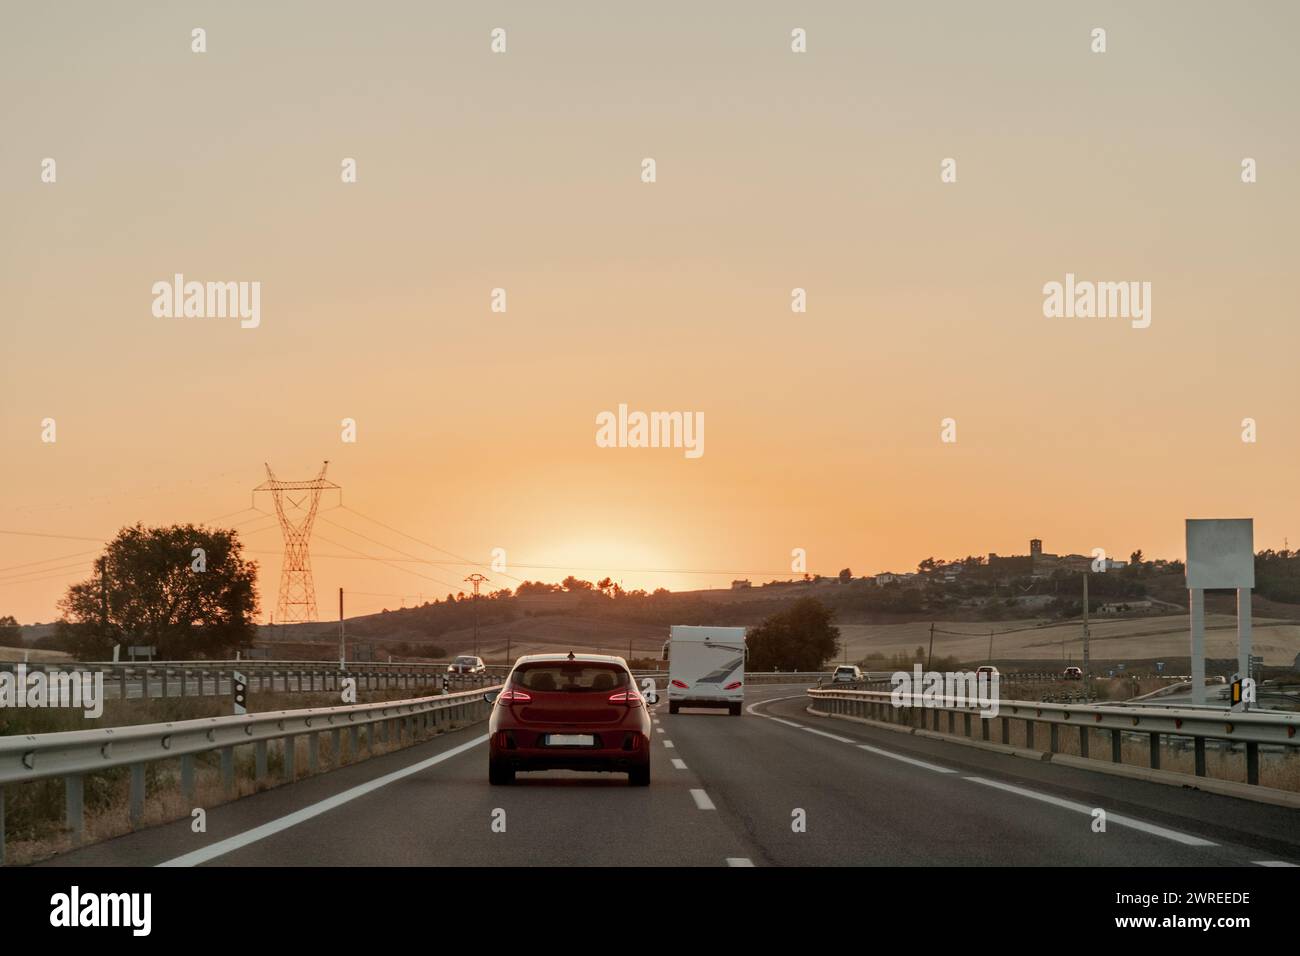 Vehicle on asphalt road, under sunset sky, driving on thoroughfare Stock Photo